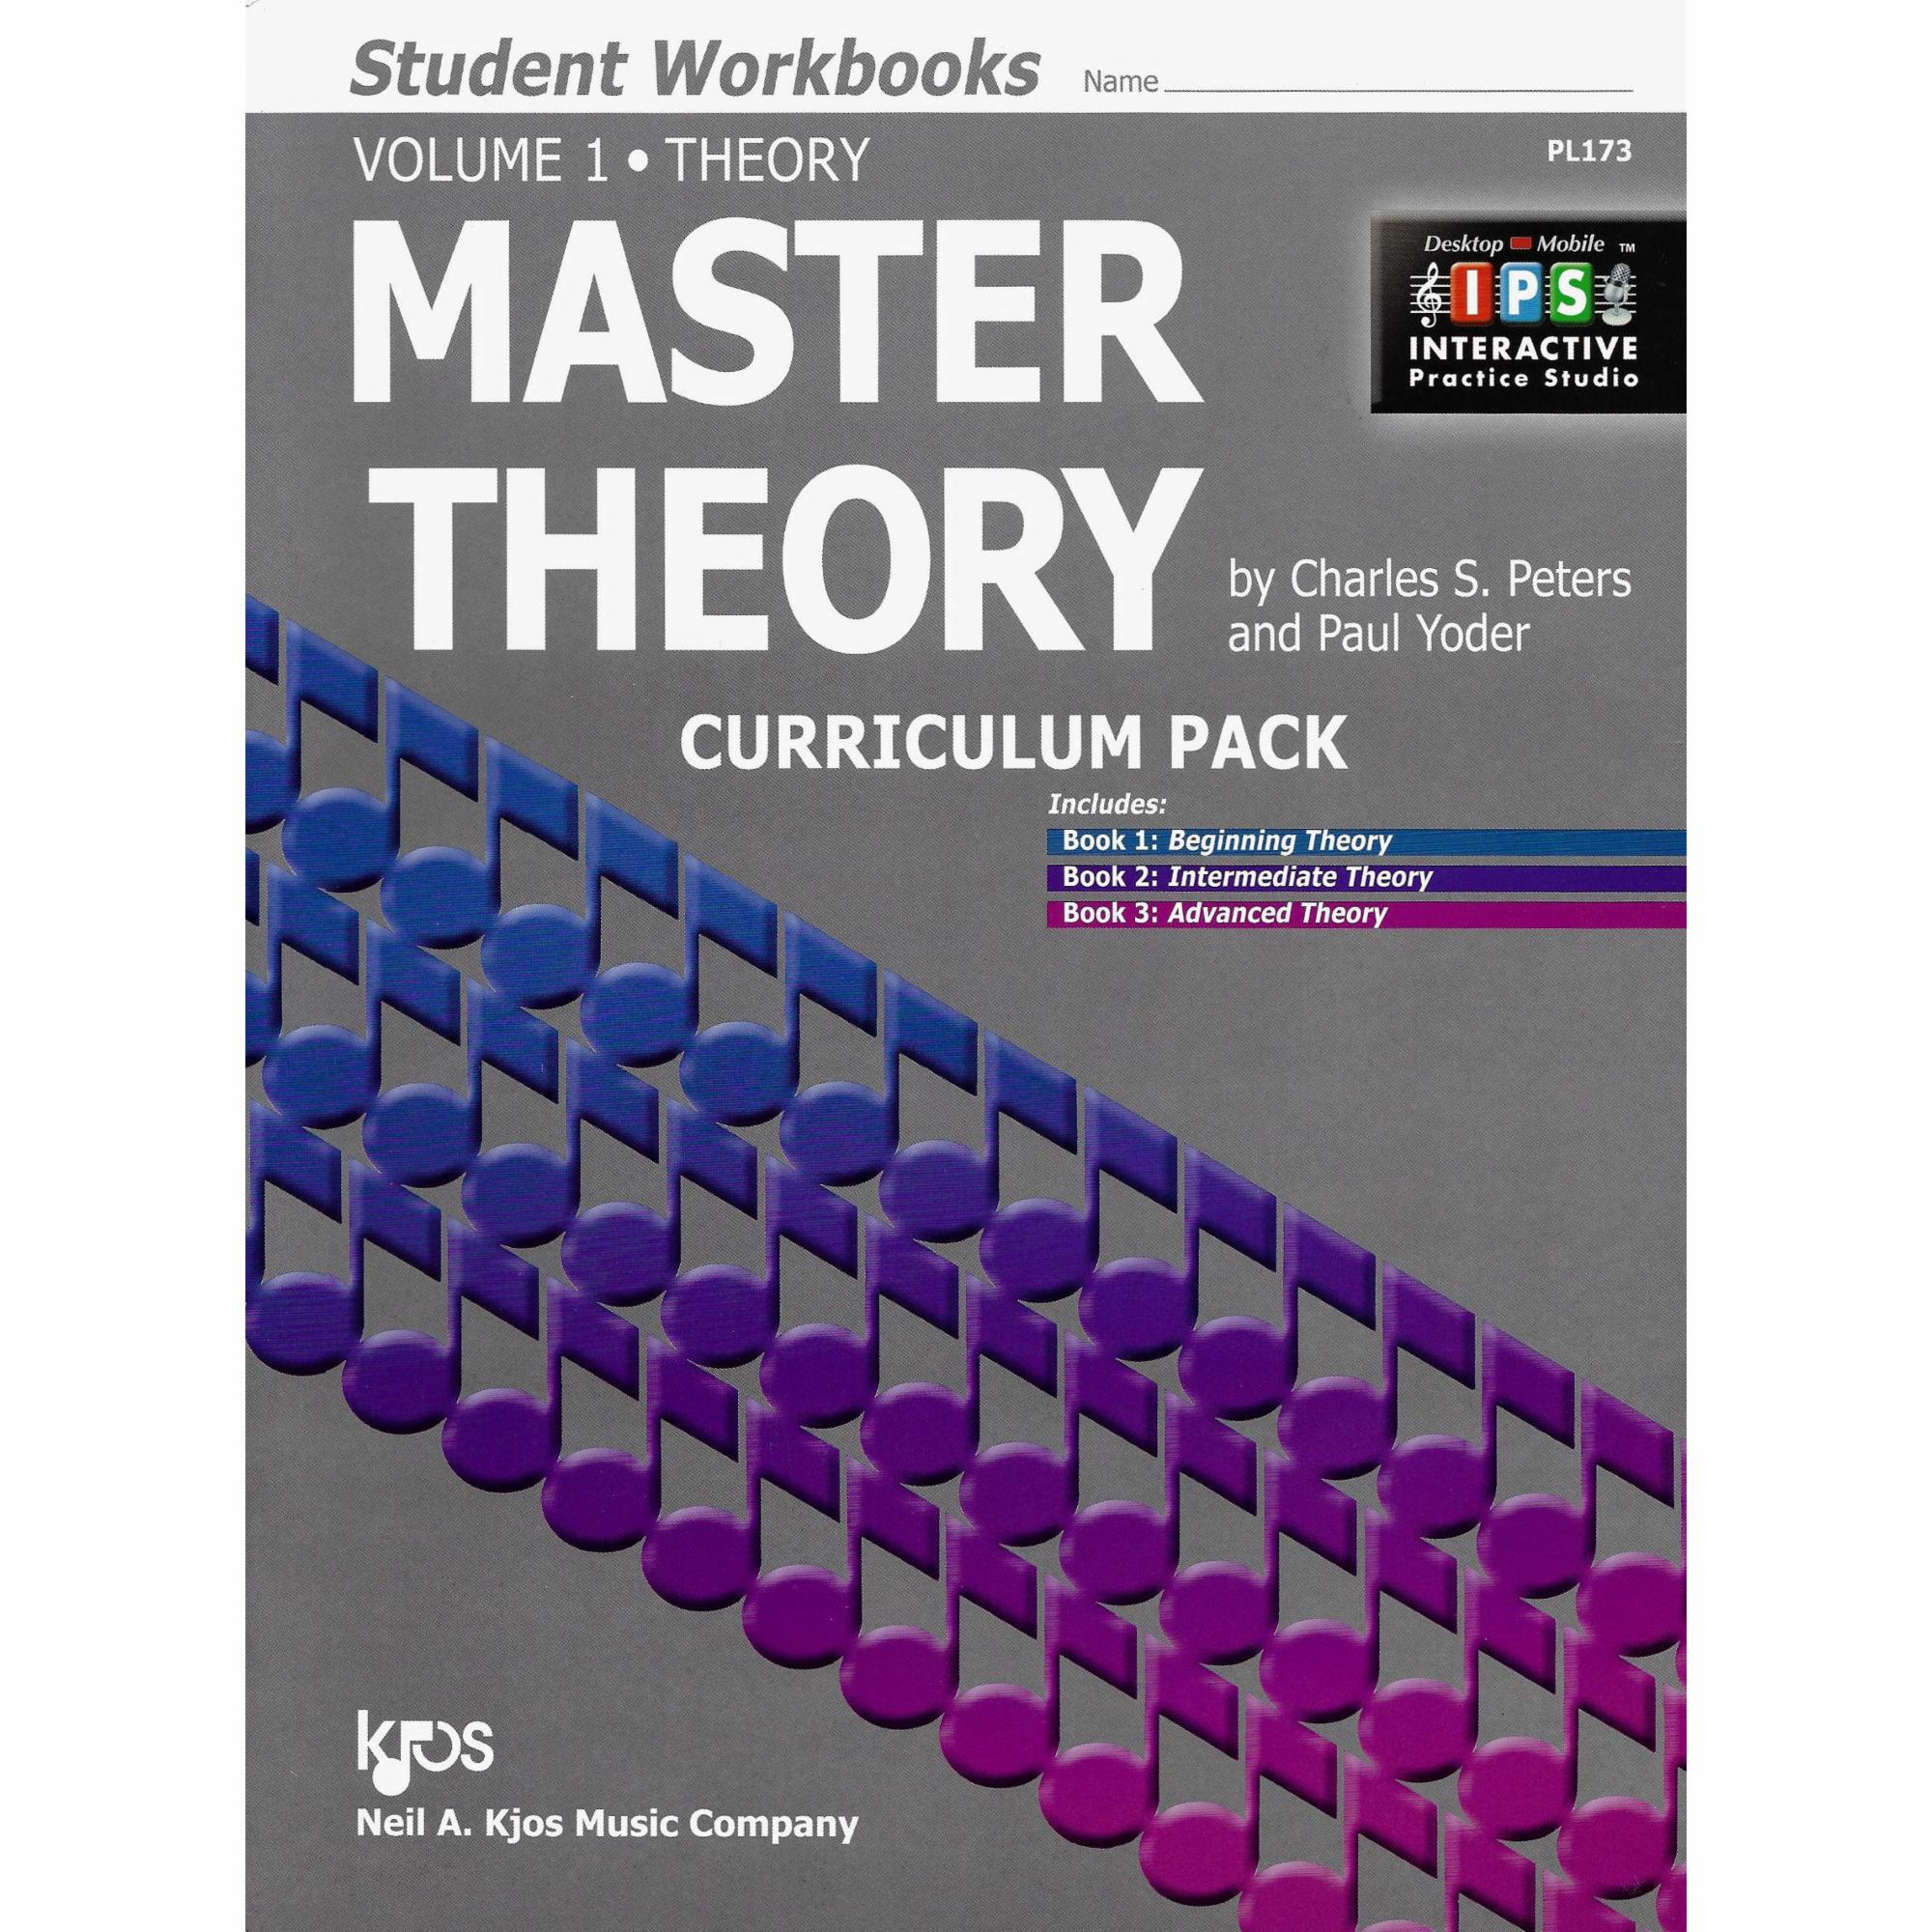 Master Theory Curriculum Pack, Volume 1